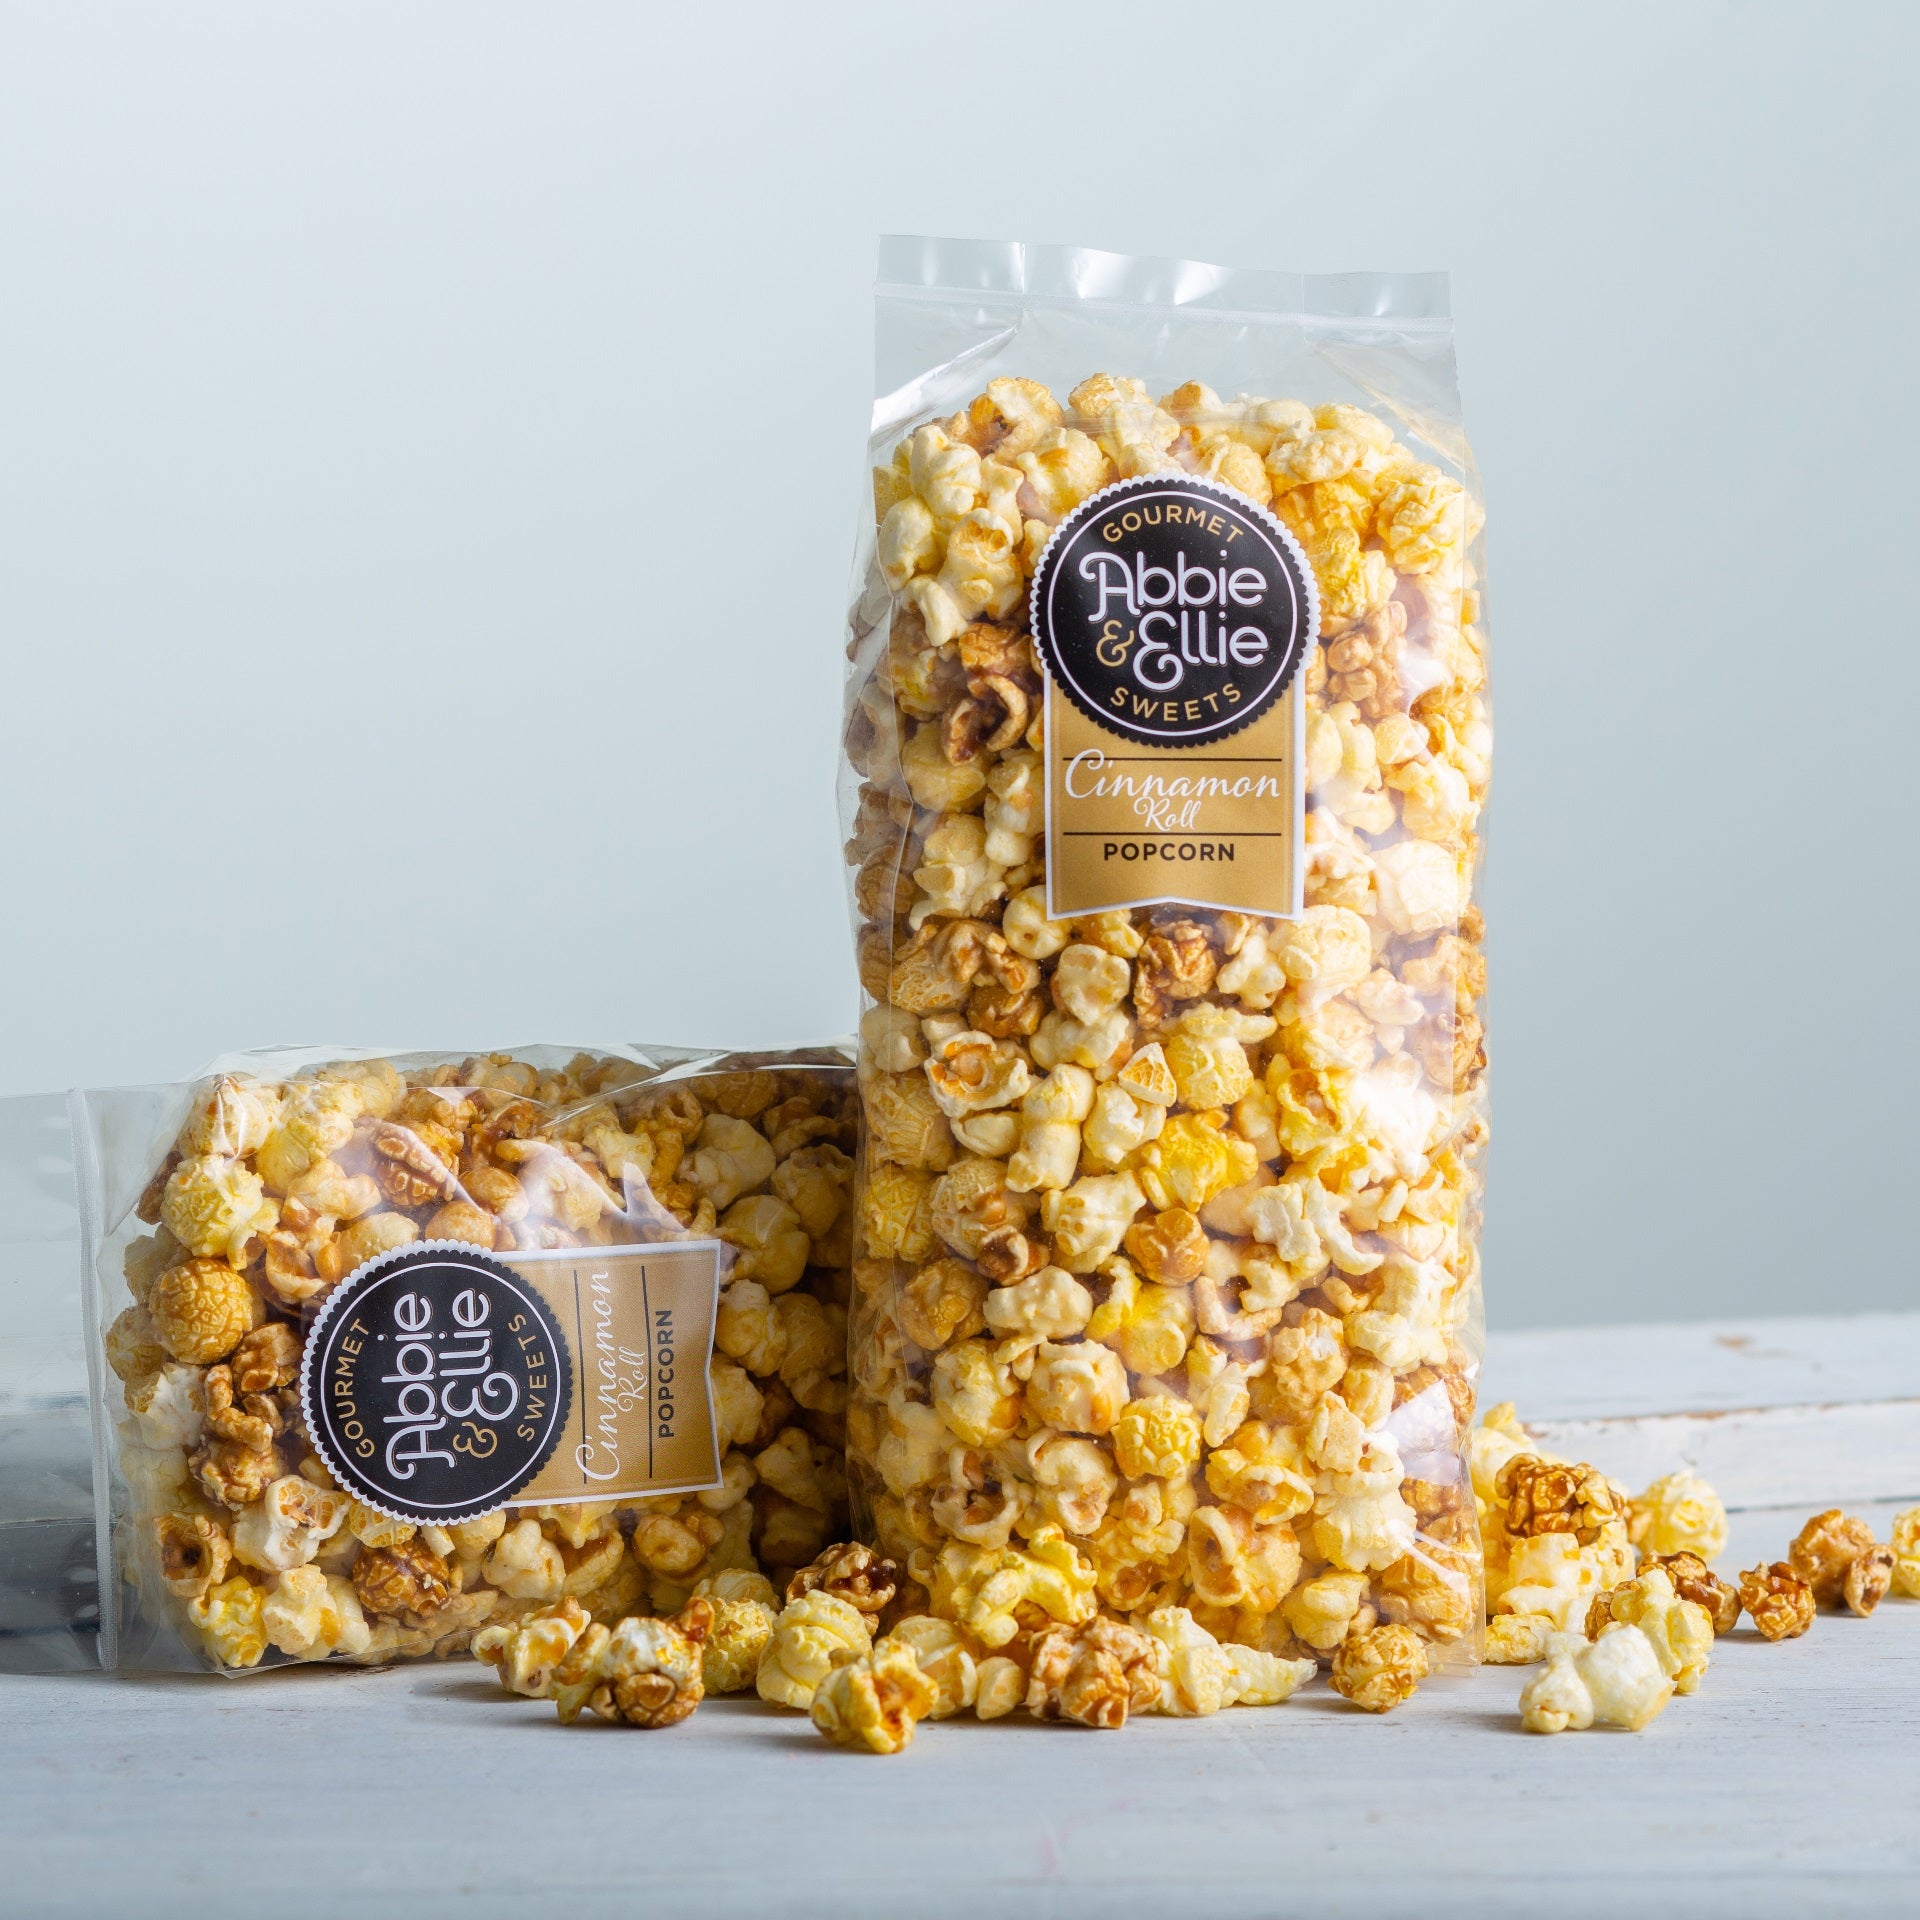 Abbie & Ellie Cinnamon Roll Gourmet Popcorn - Box of 6